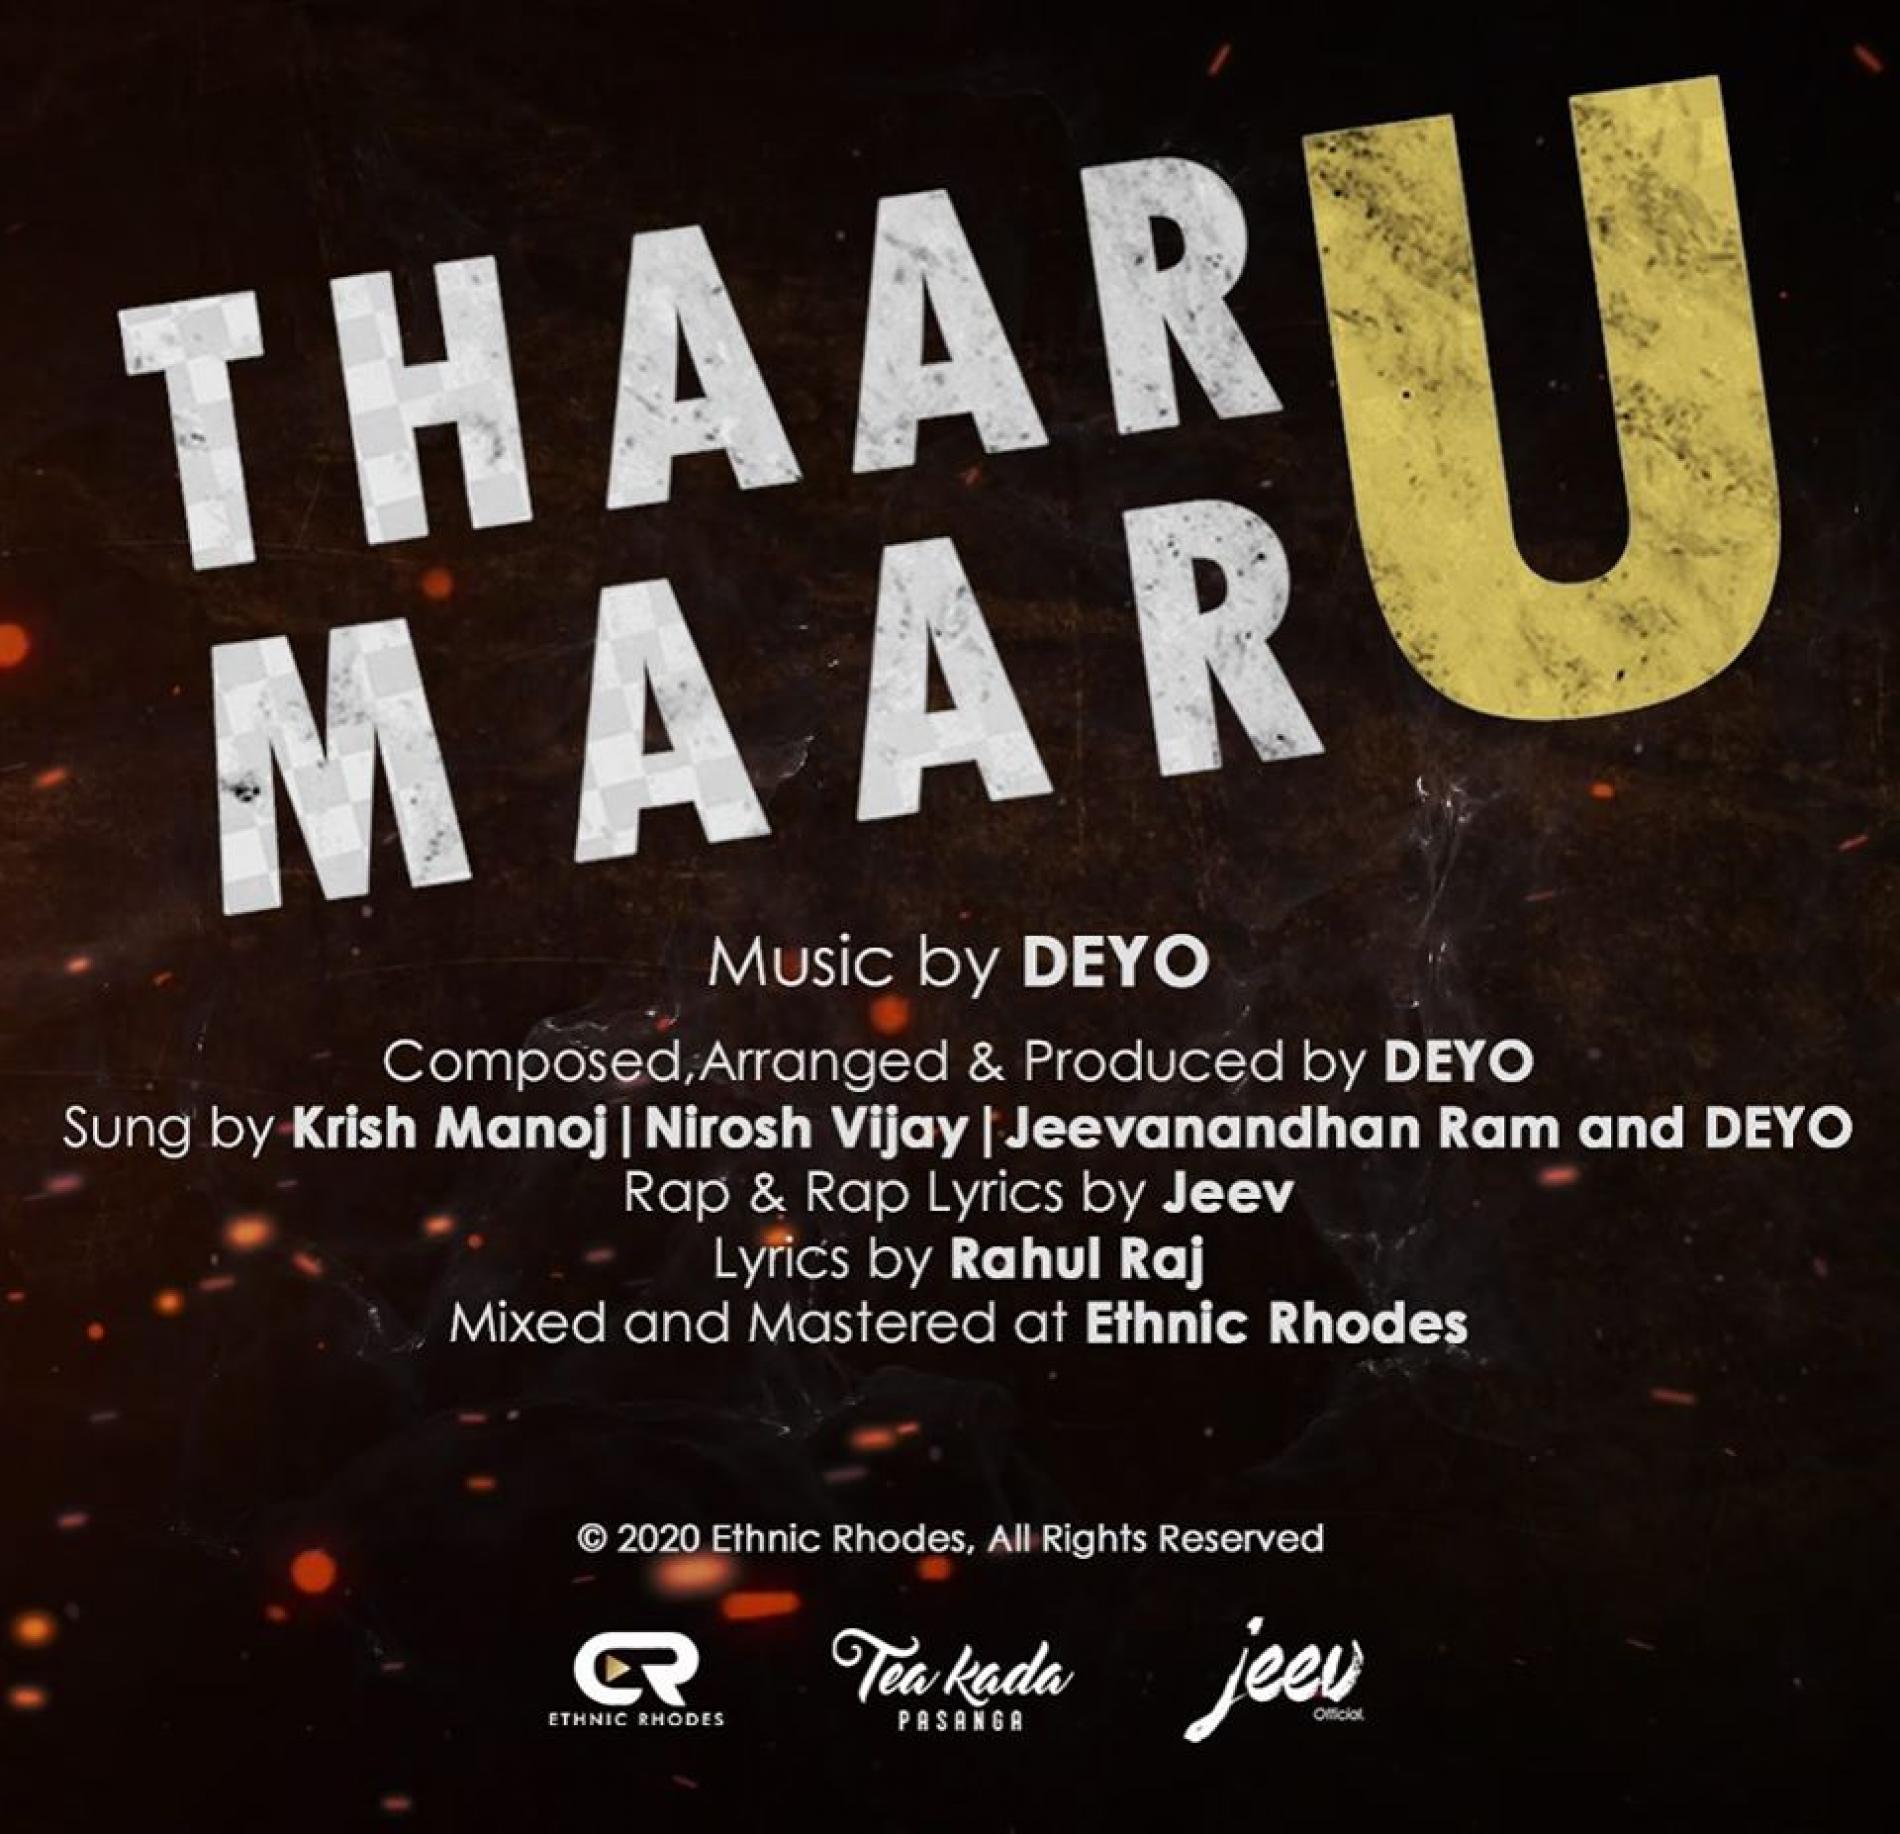 Thaaru Maaru – DEYO Featuring Tea Kada Pasanga (A DEYO Musical) Official Lyrical Video